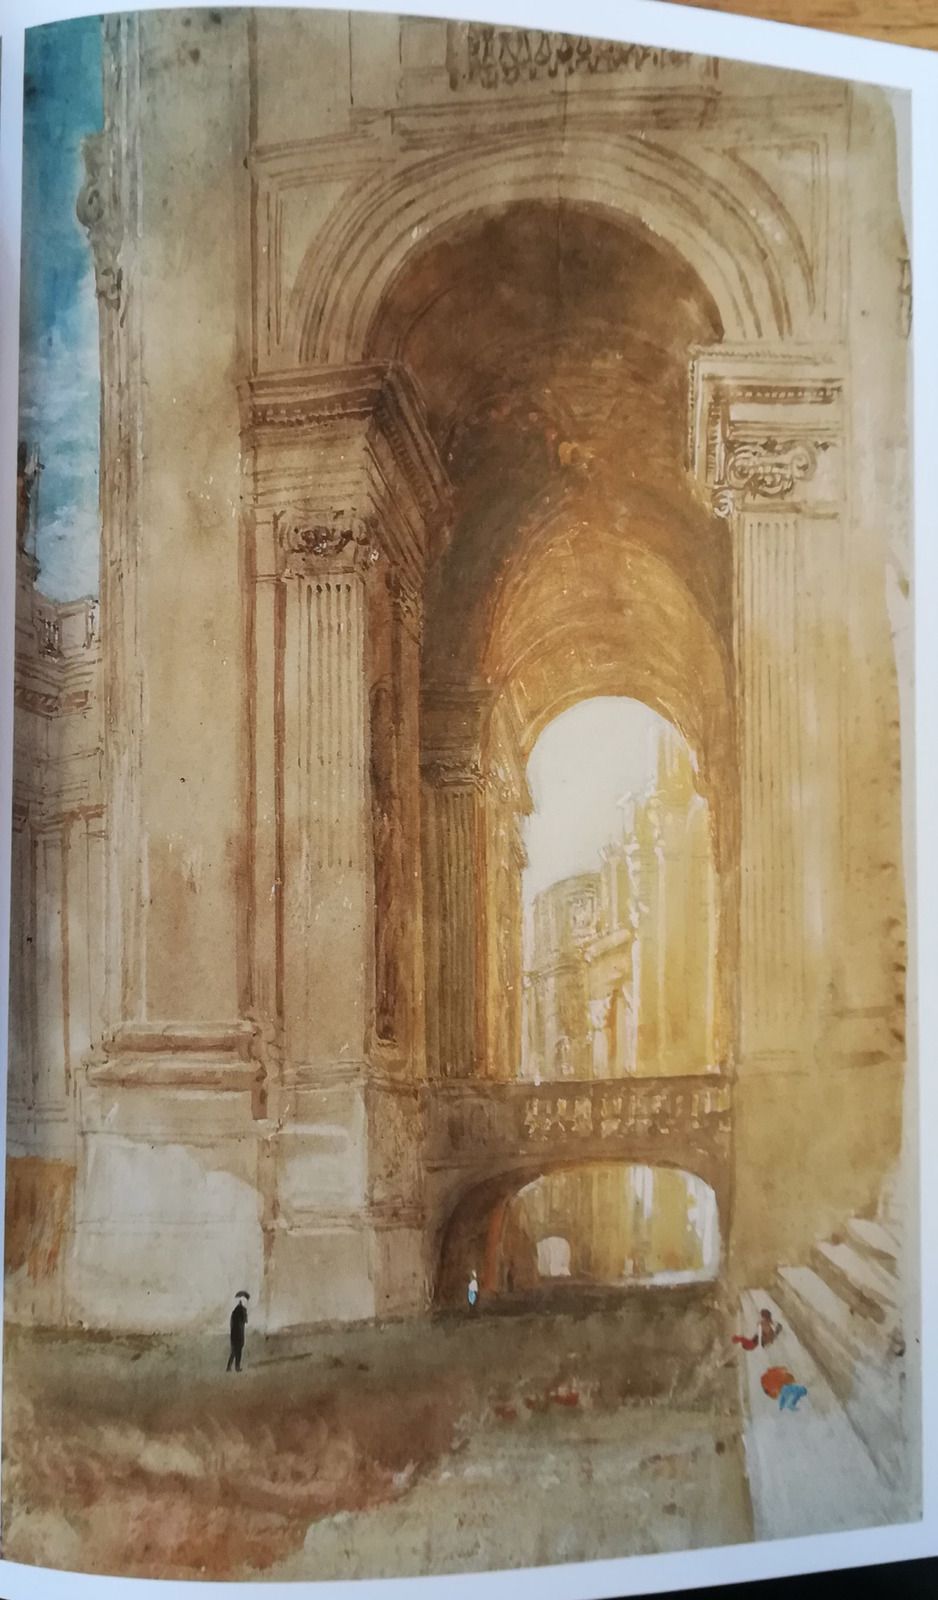 Joseph Mallord William Turner, Partie de la façade de Saint-Pierre de Rome, avec l'Arco delle Campane (1819).